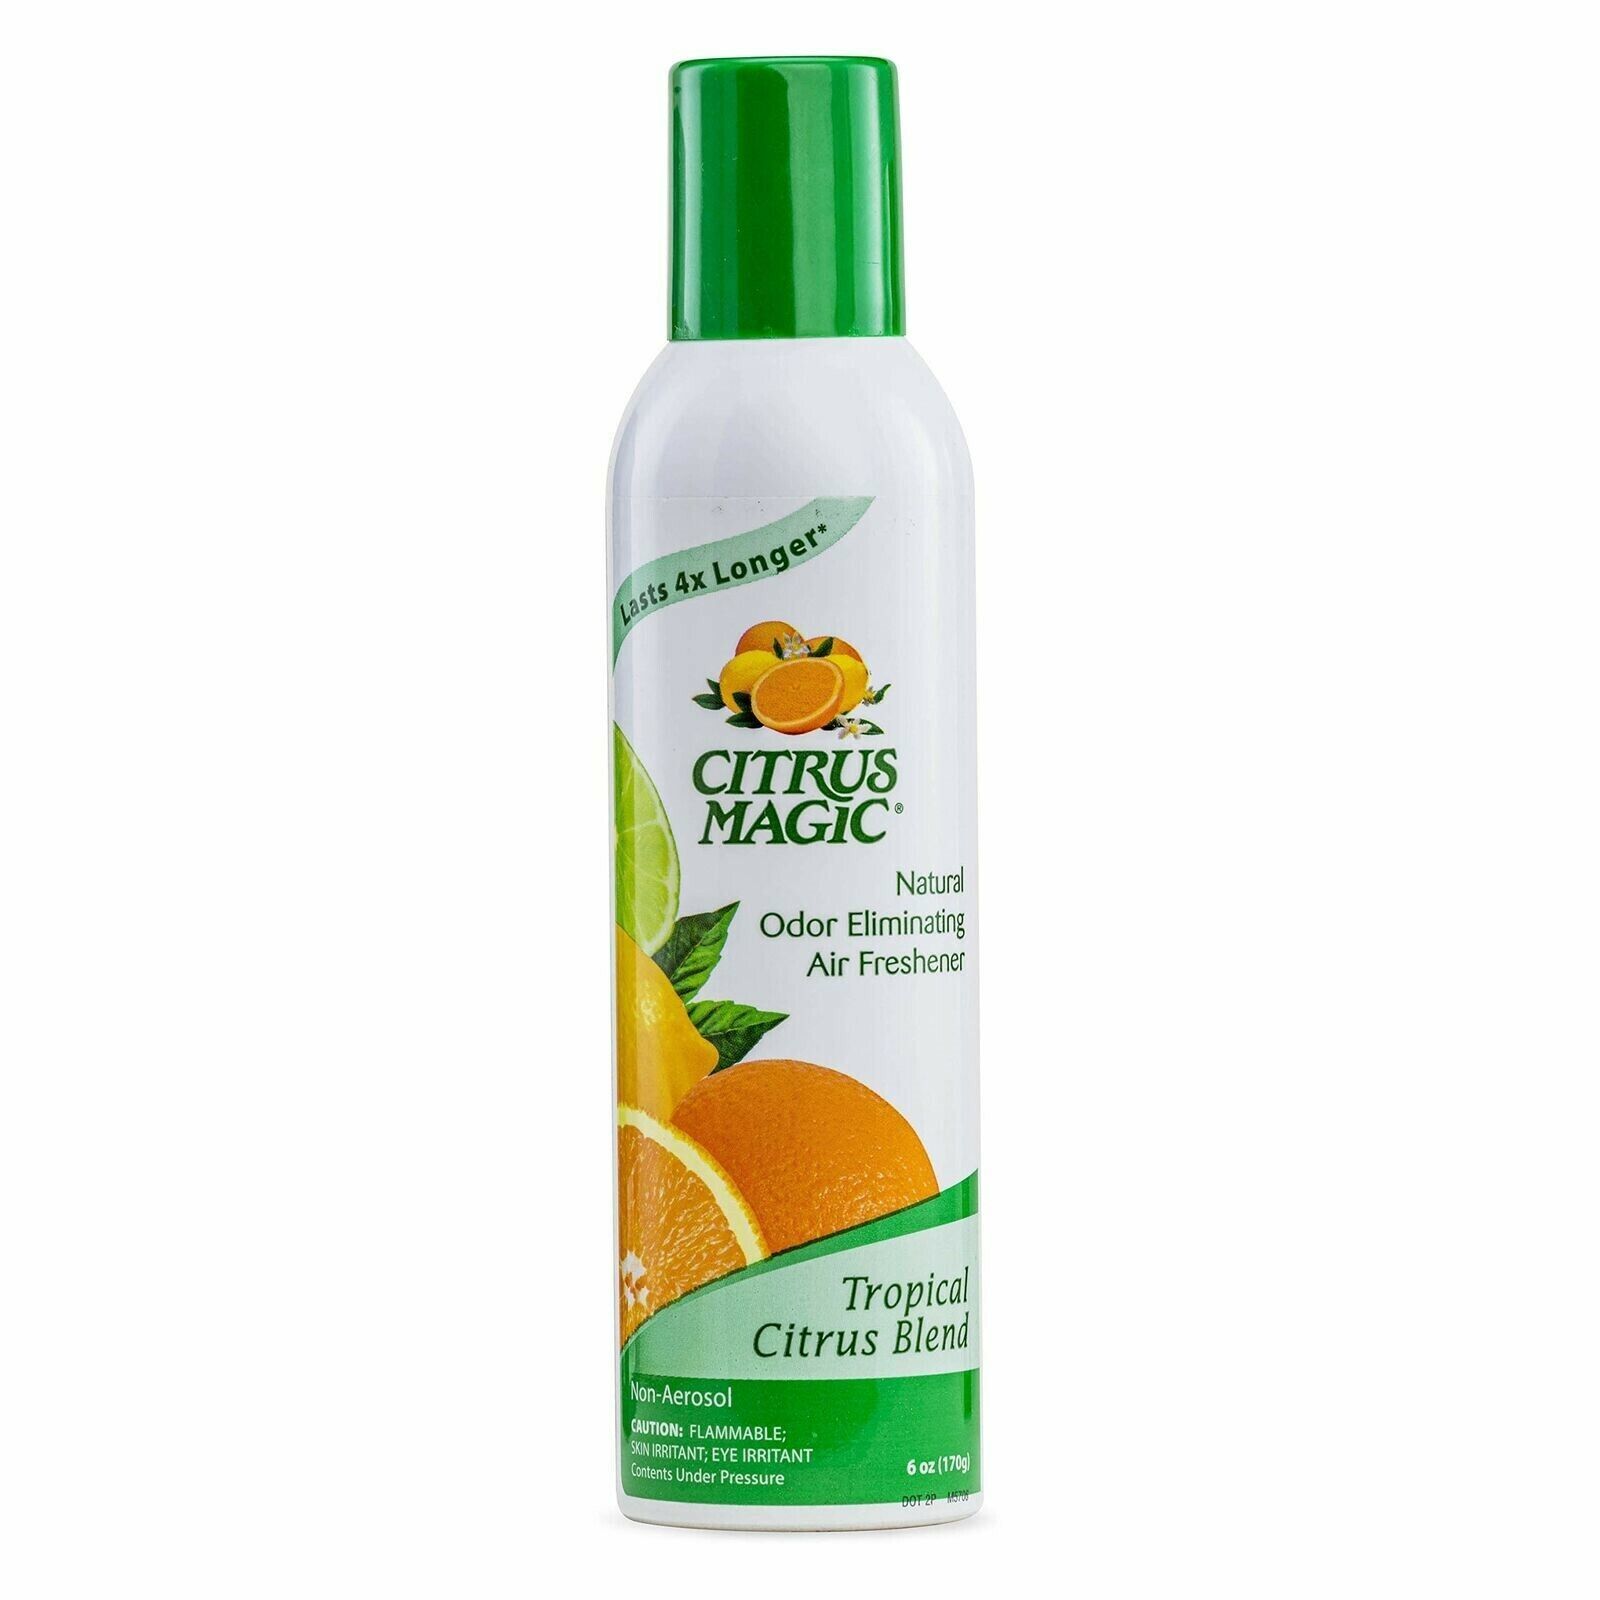 Citrus Magic Natural Odor Eliminating Air Freshener Spray Tropical Citrus Ble... - $16.32